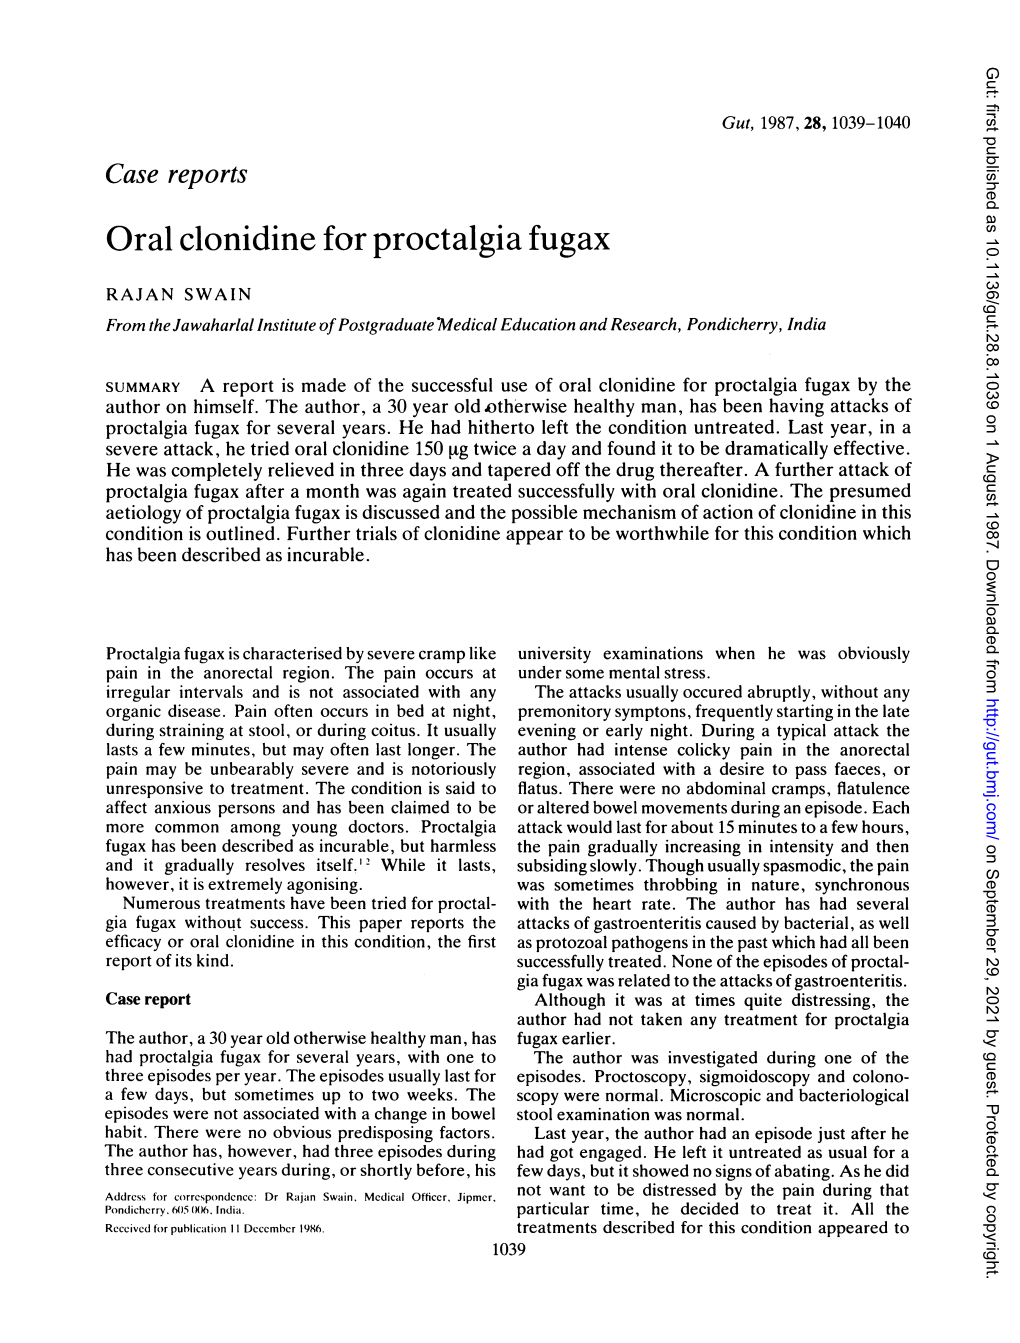 Oral Clonidine for Proctalgia Fugax